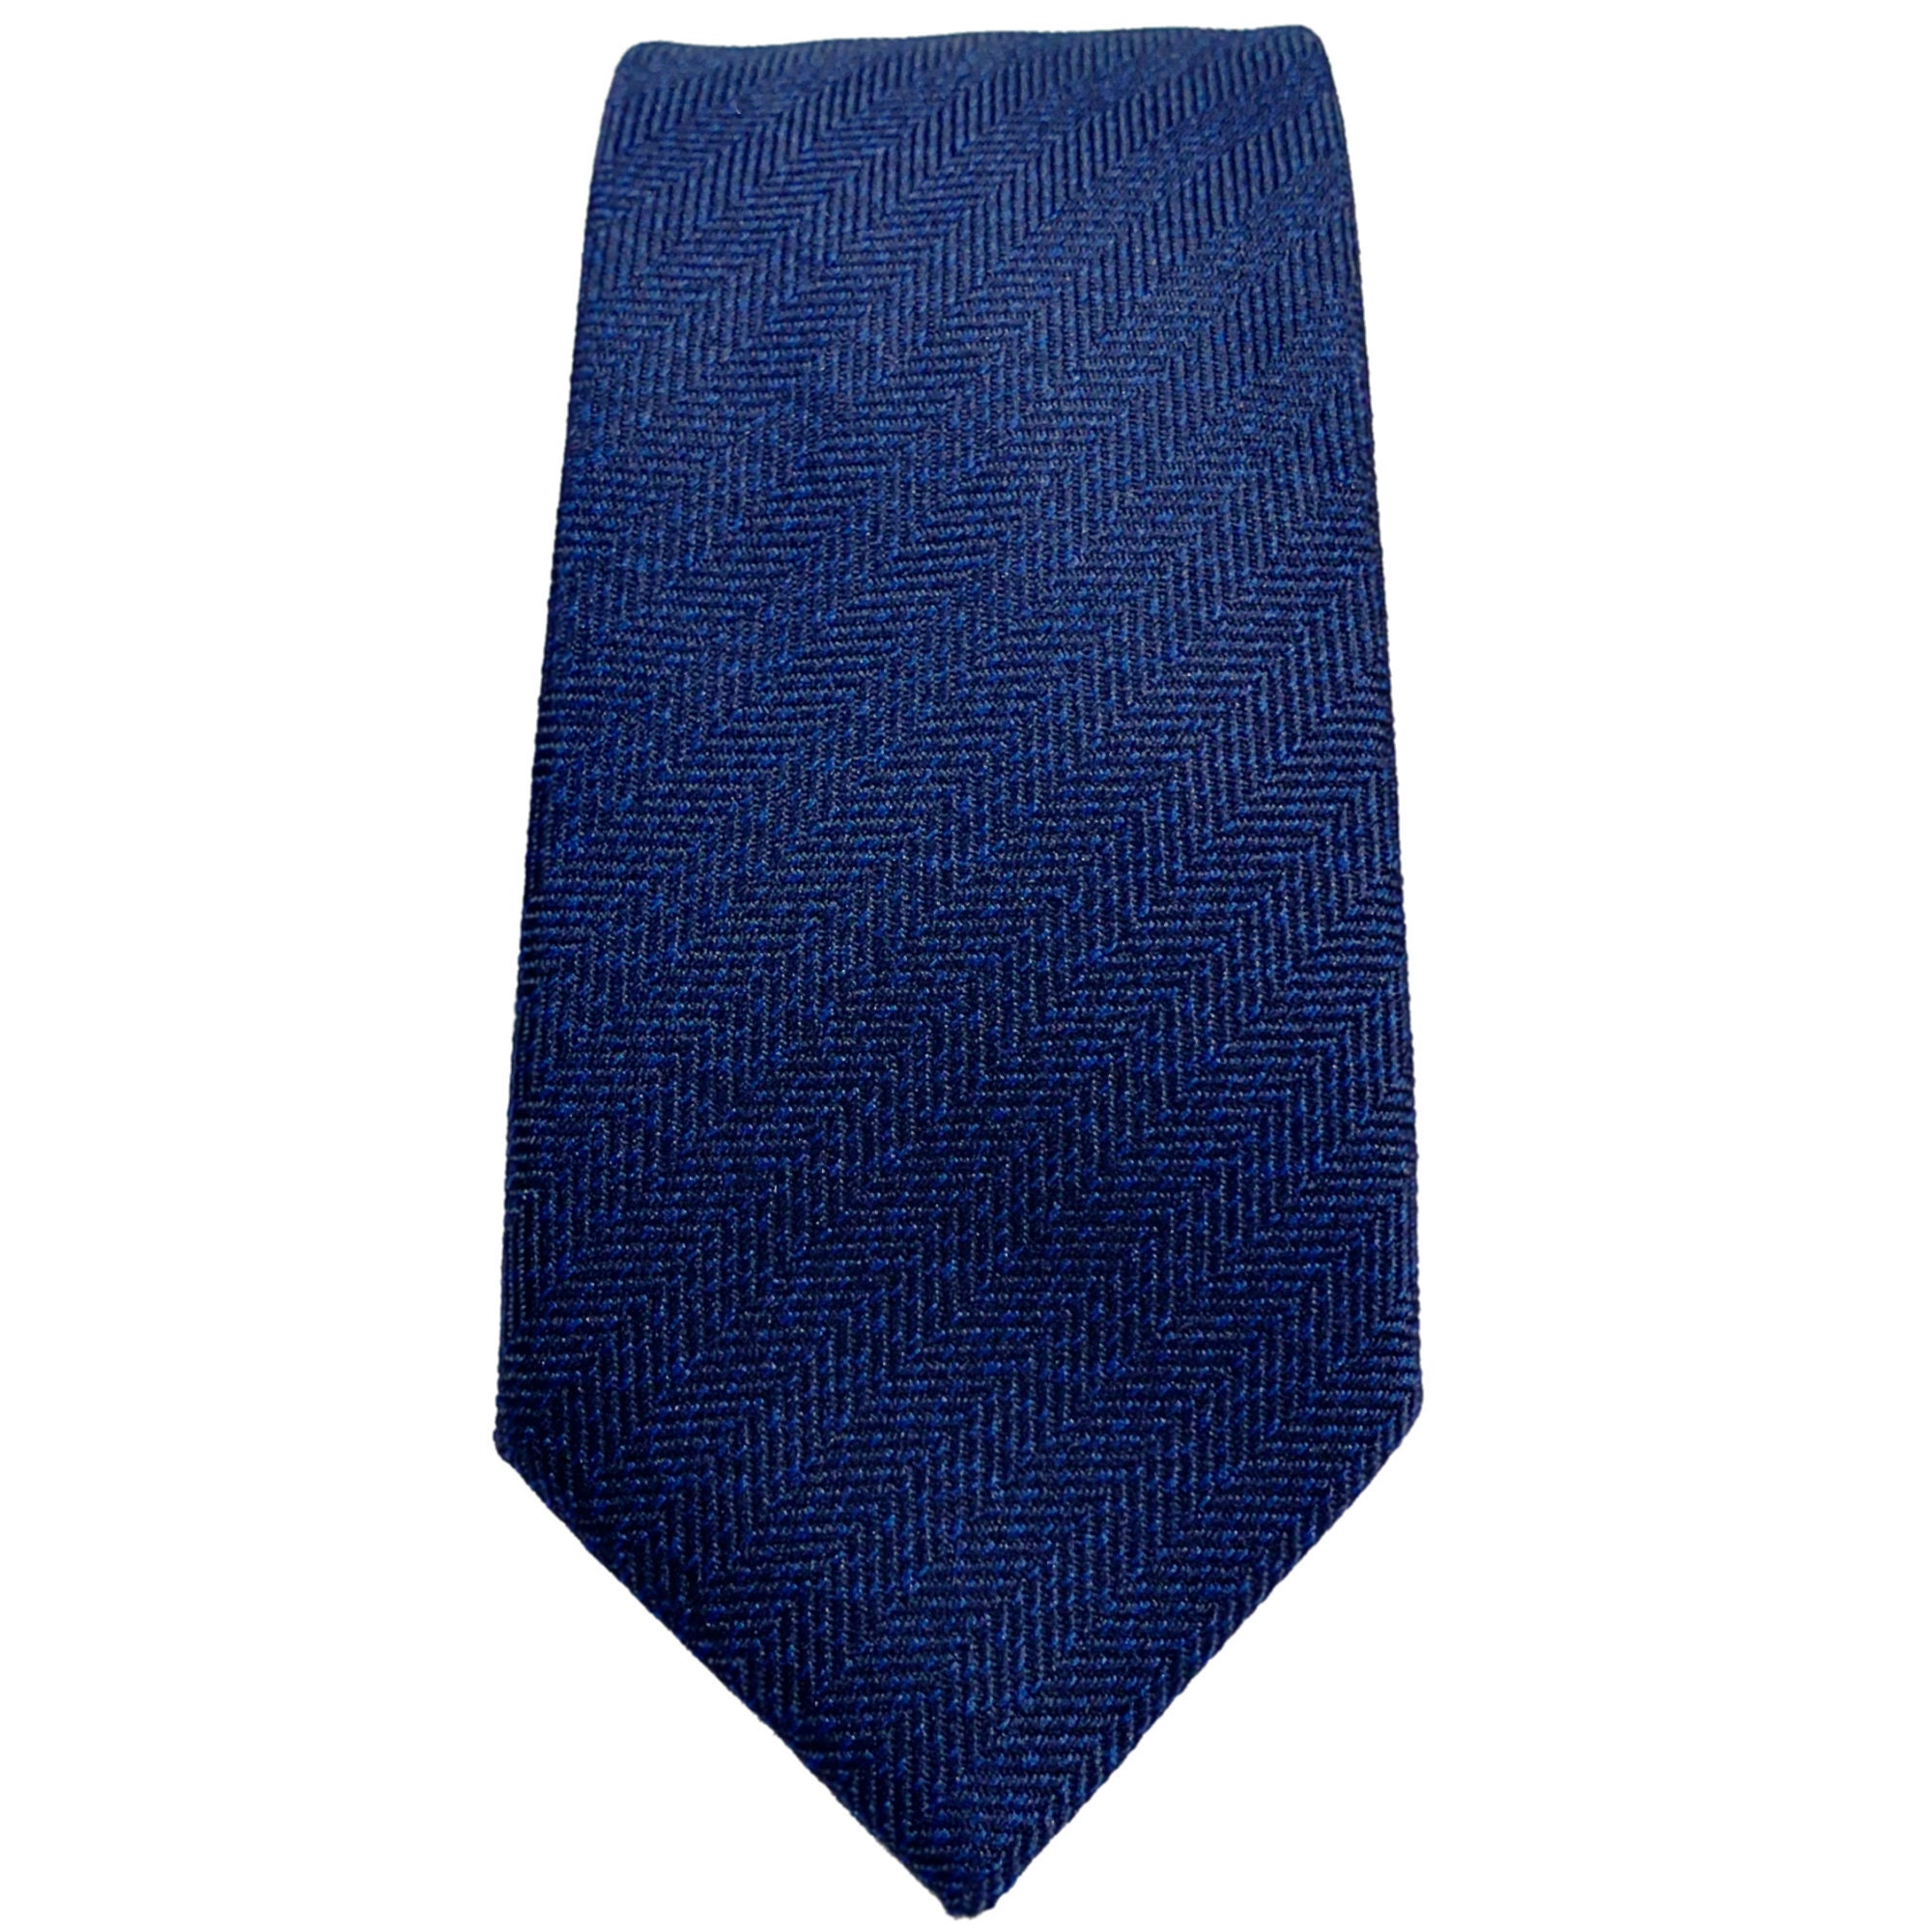 Dark Blue Tie With a Herringbone Pattern 2.36 6cm - Etsy